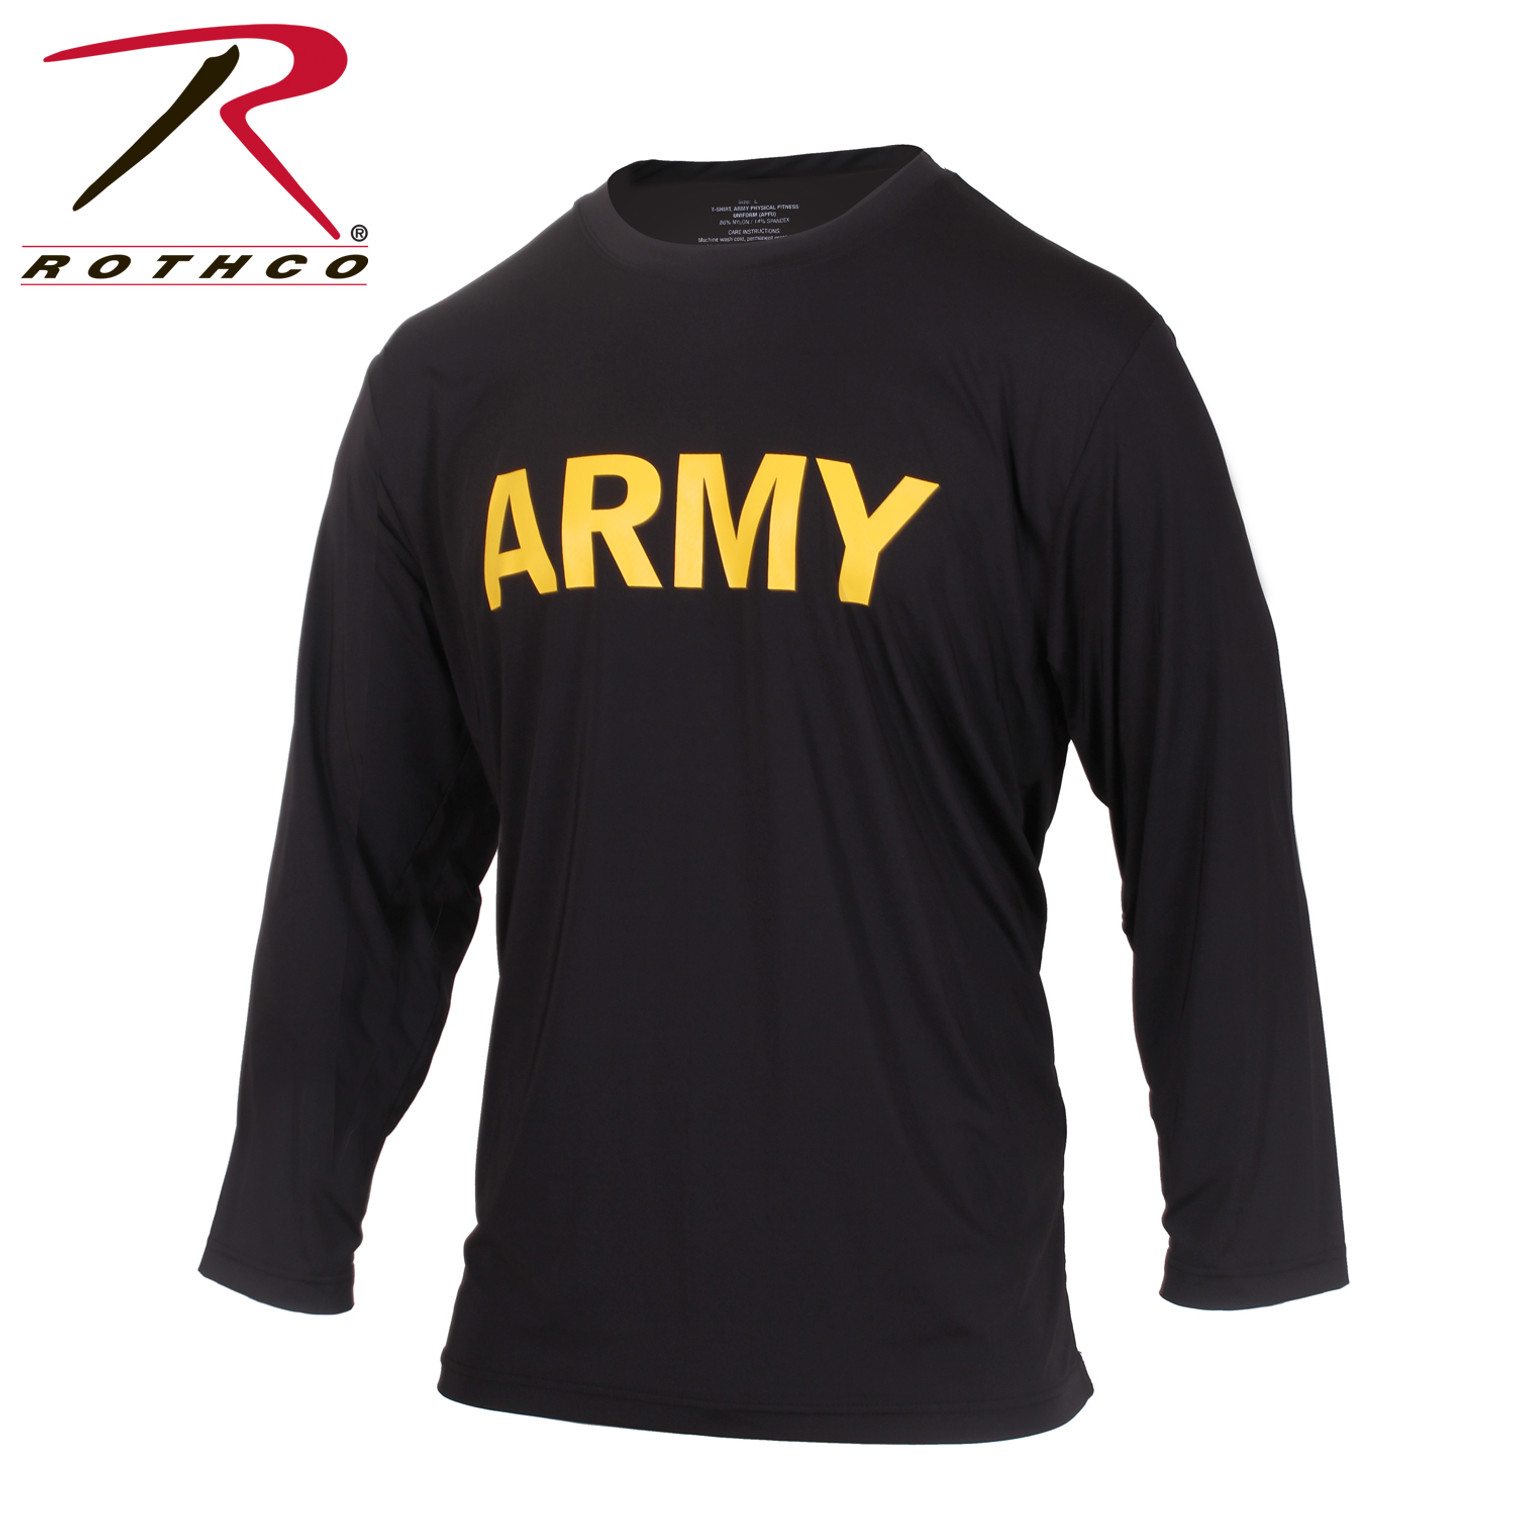 Rothco Long Sleeve Army PT Shirt